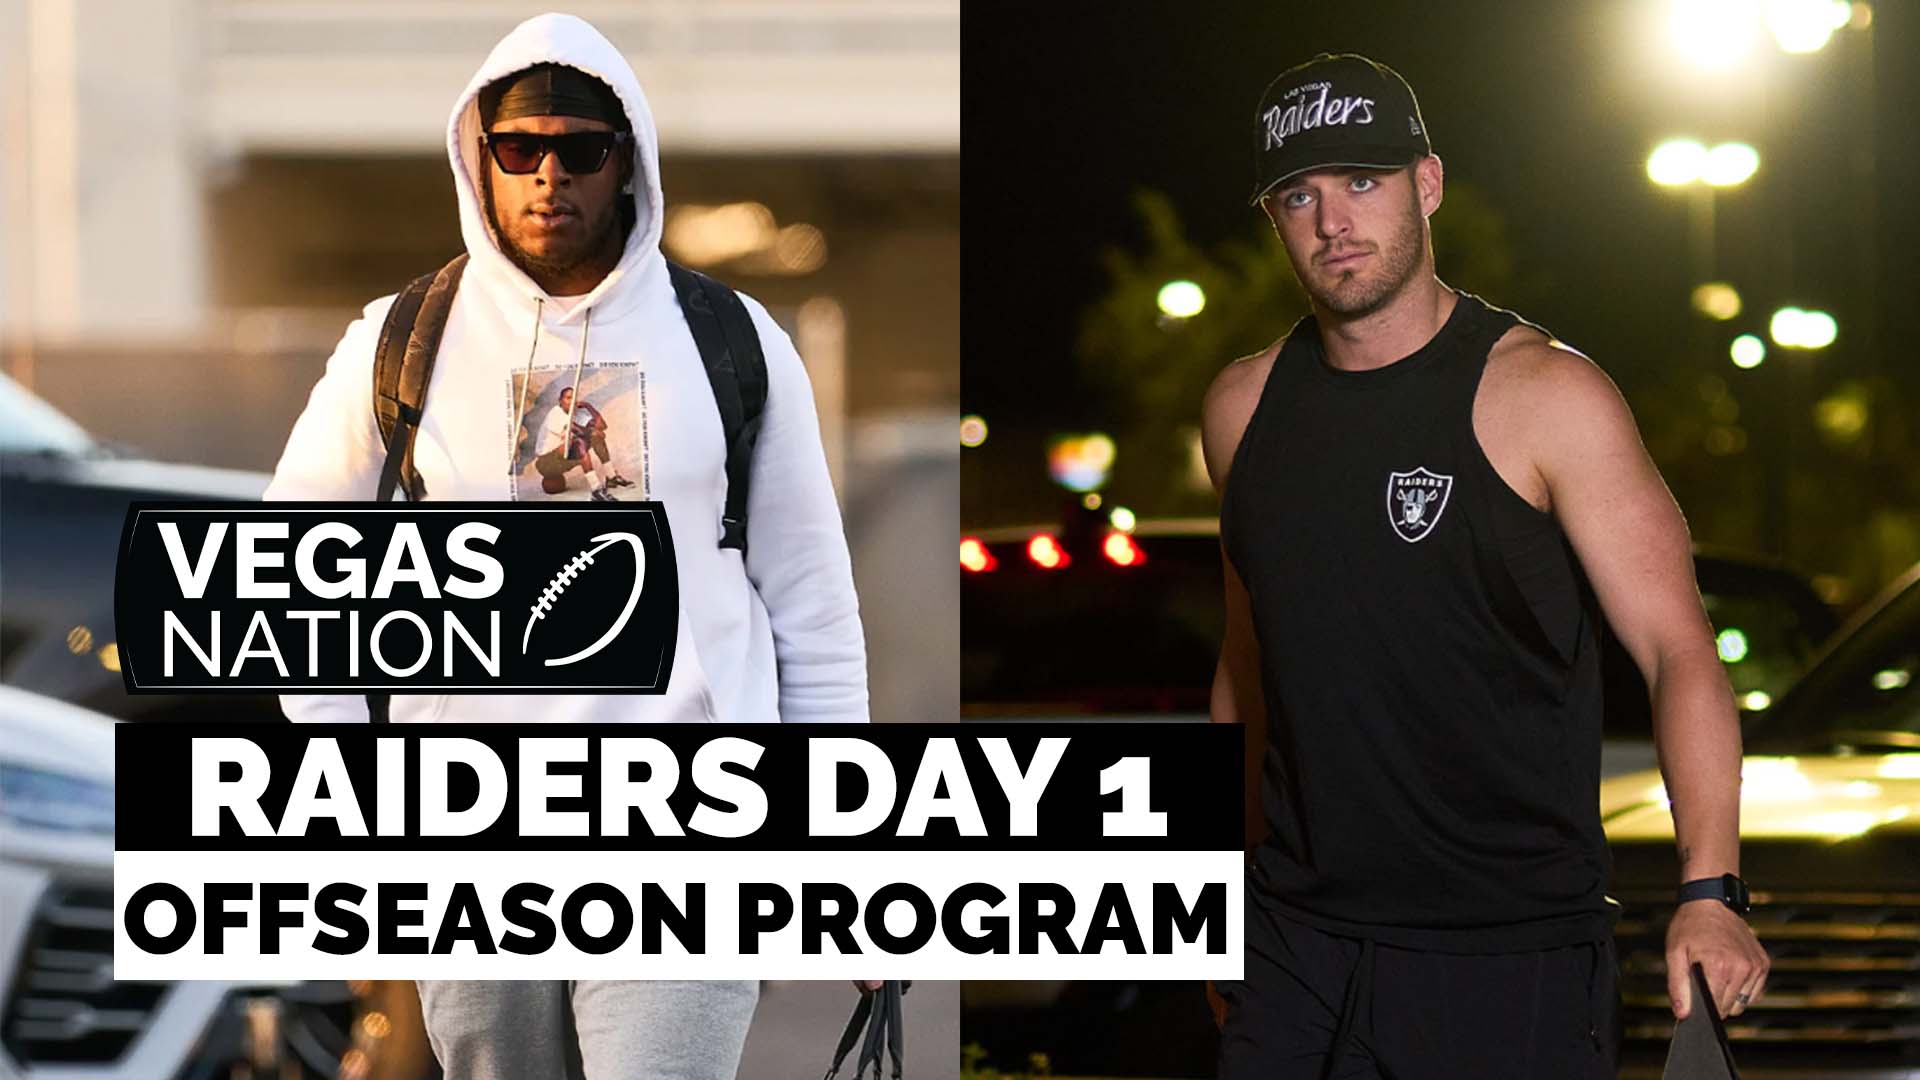 Raiders report for day 1 of offseason program